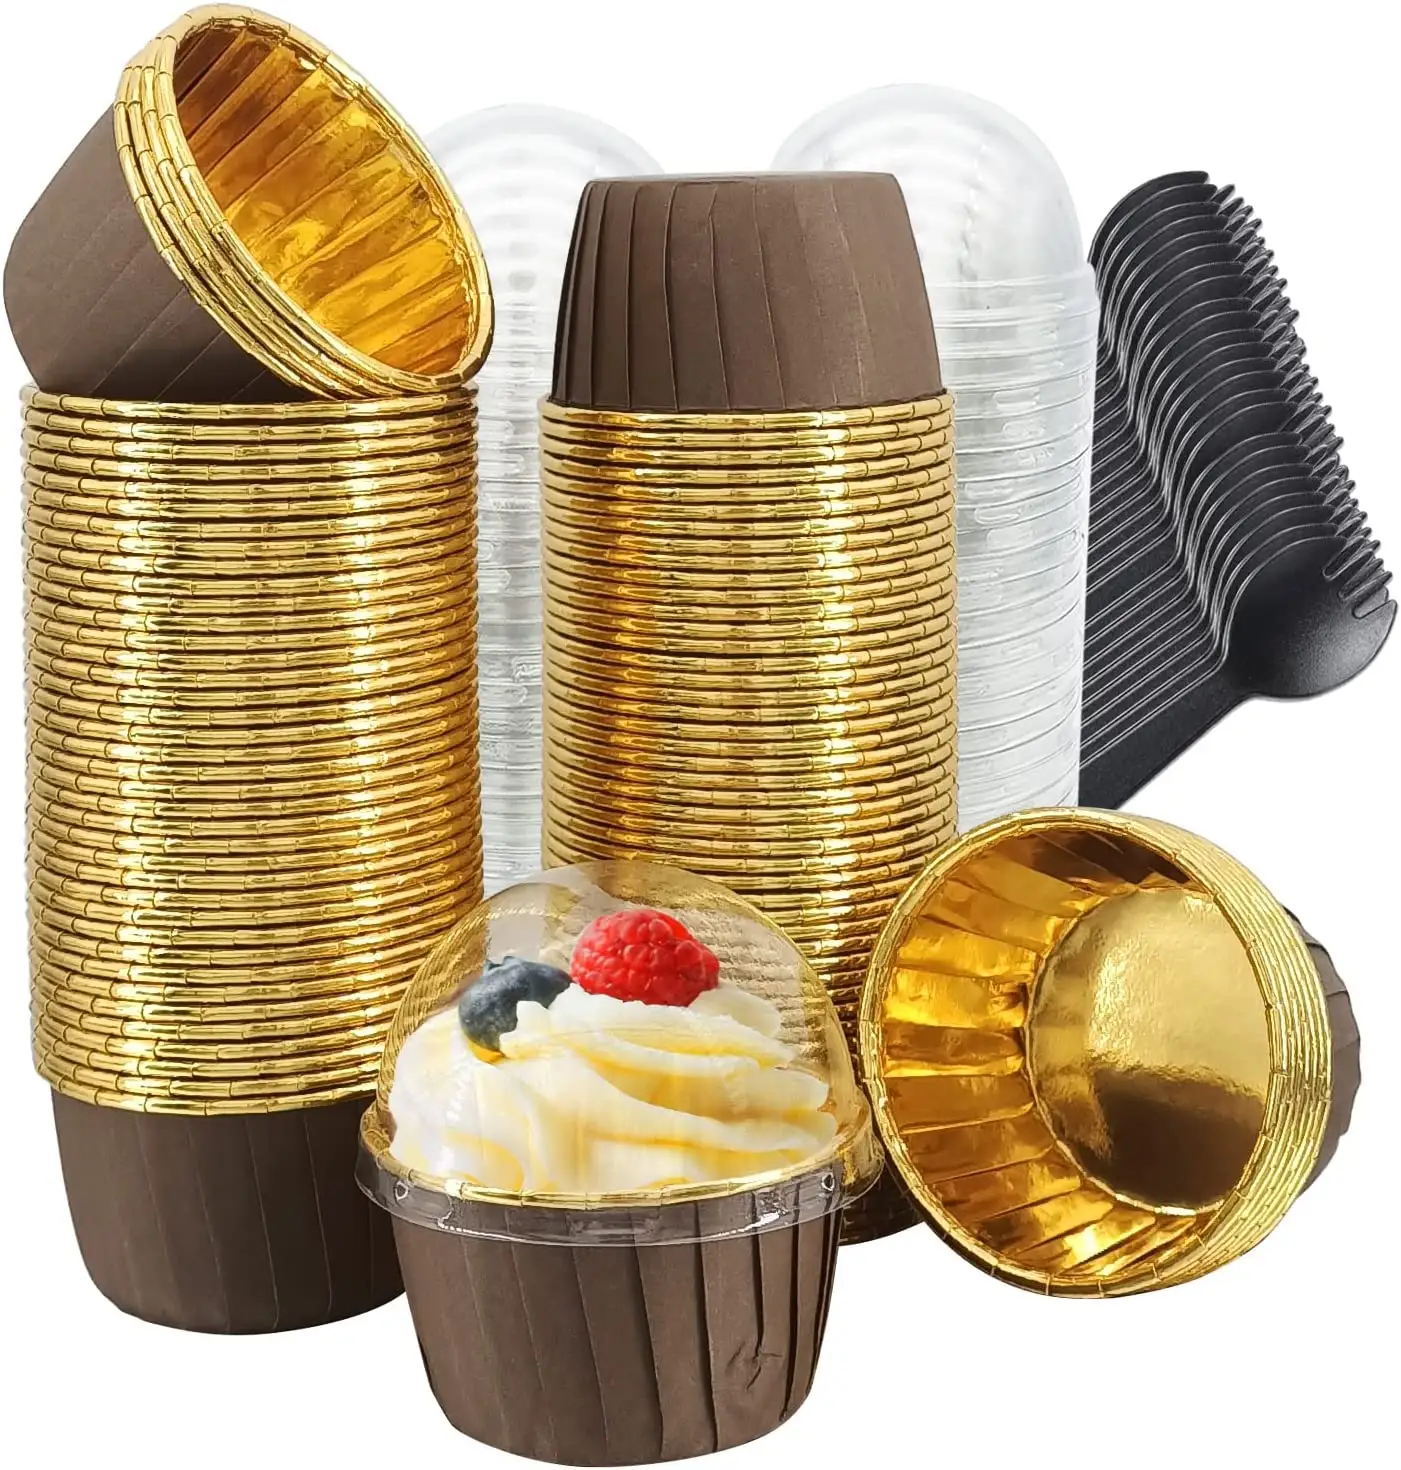 Mini Muffin liner 3.5oz Cupcake memanggang cangkir aluminium Foil kertas Cup Cupcake liner cangkir kue 5 warna